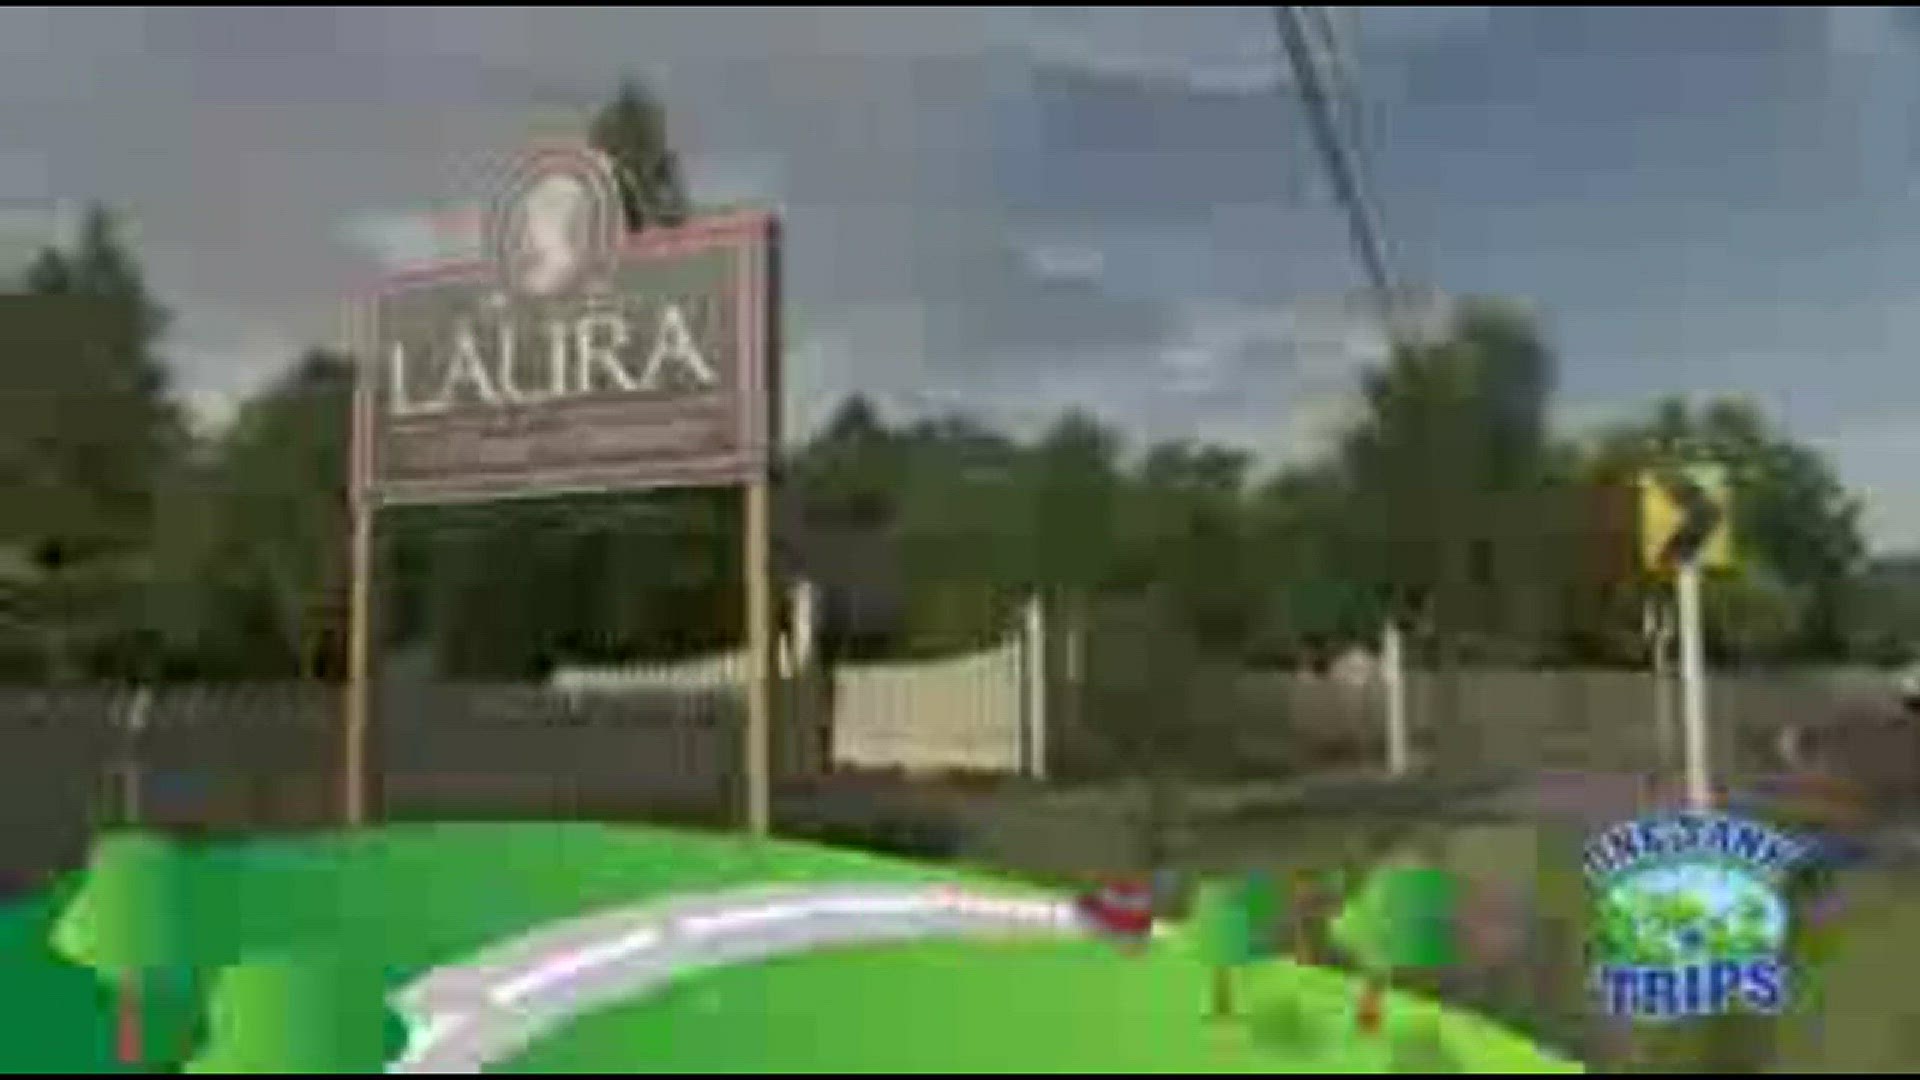 Come visit the beautiful Laura Plantation